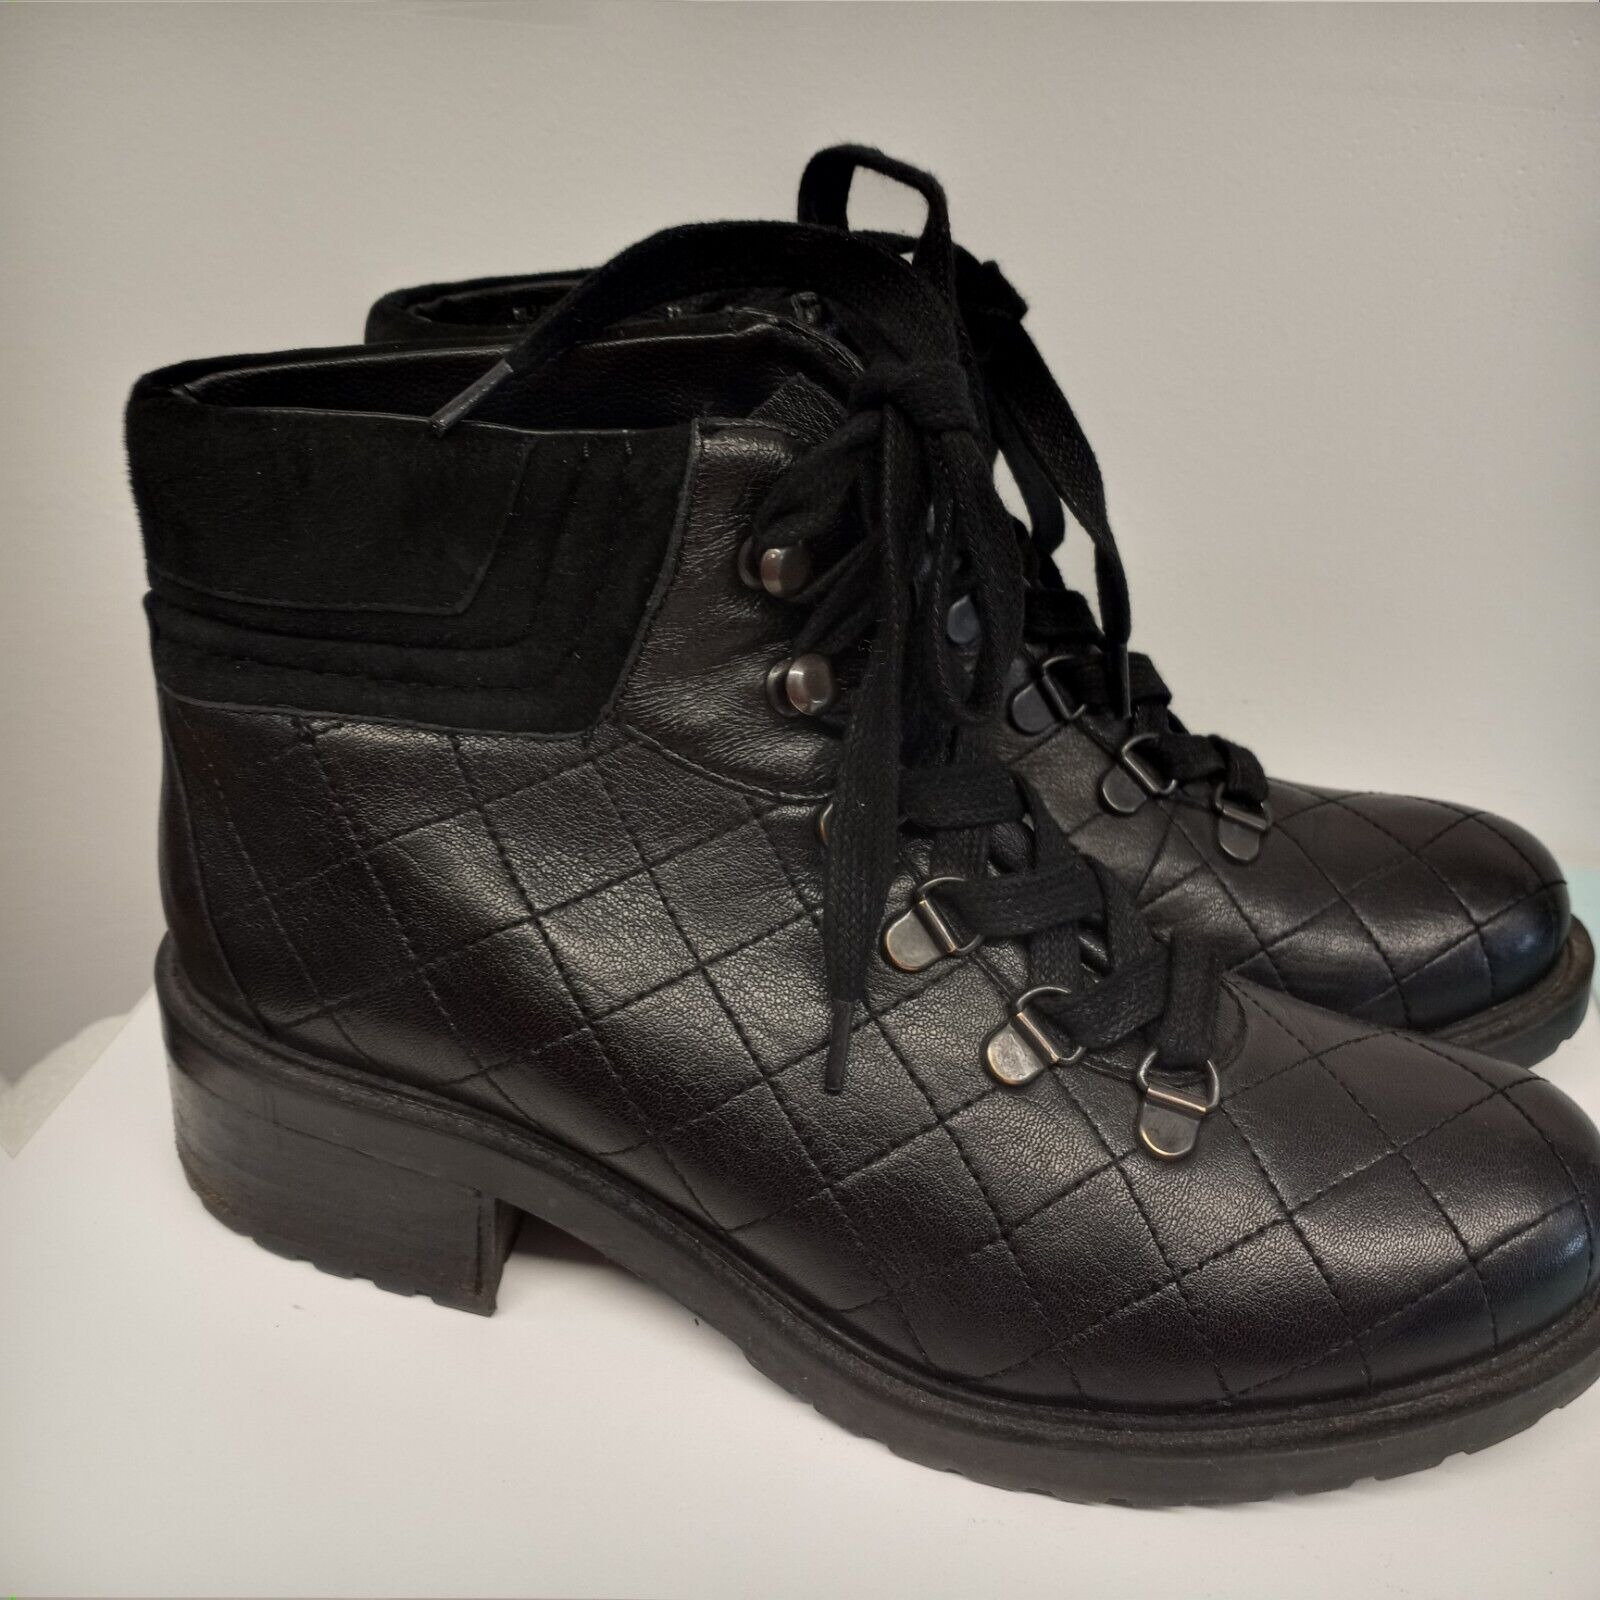 NWOB Steve Madden Black Rhinestones Combat Boots Size 9.5 Only